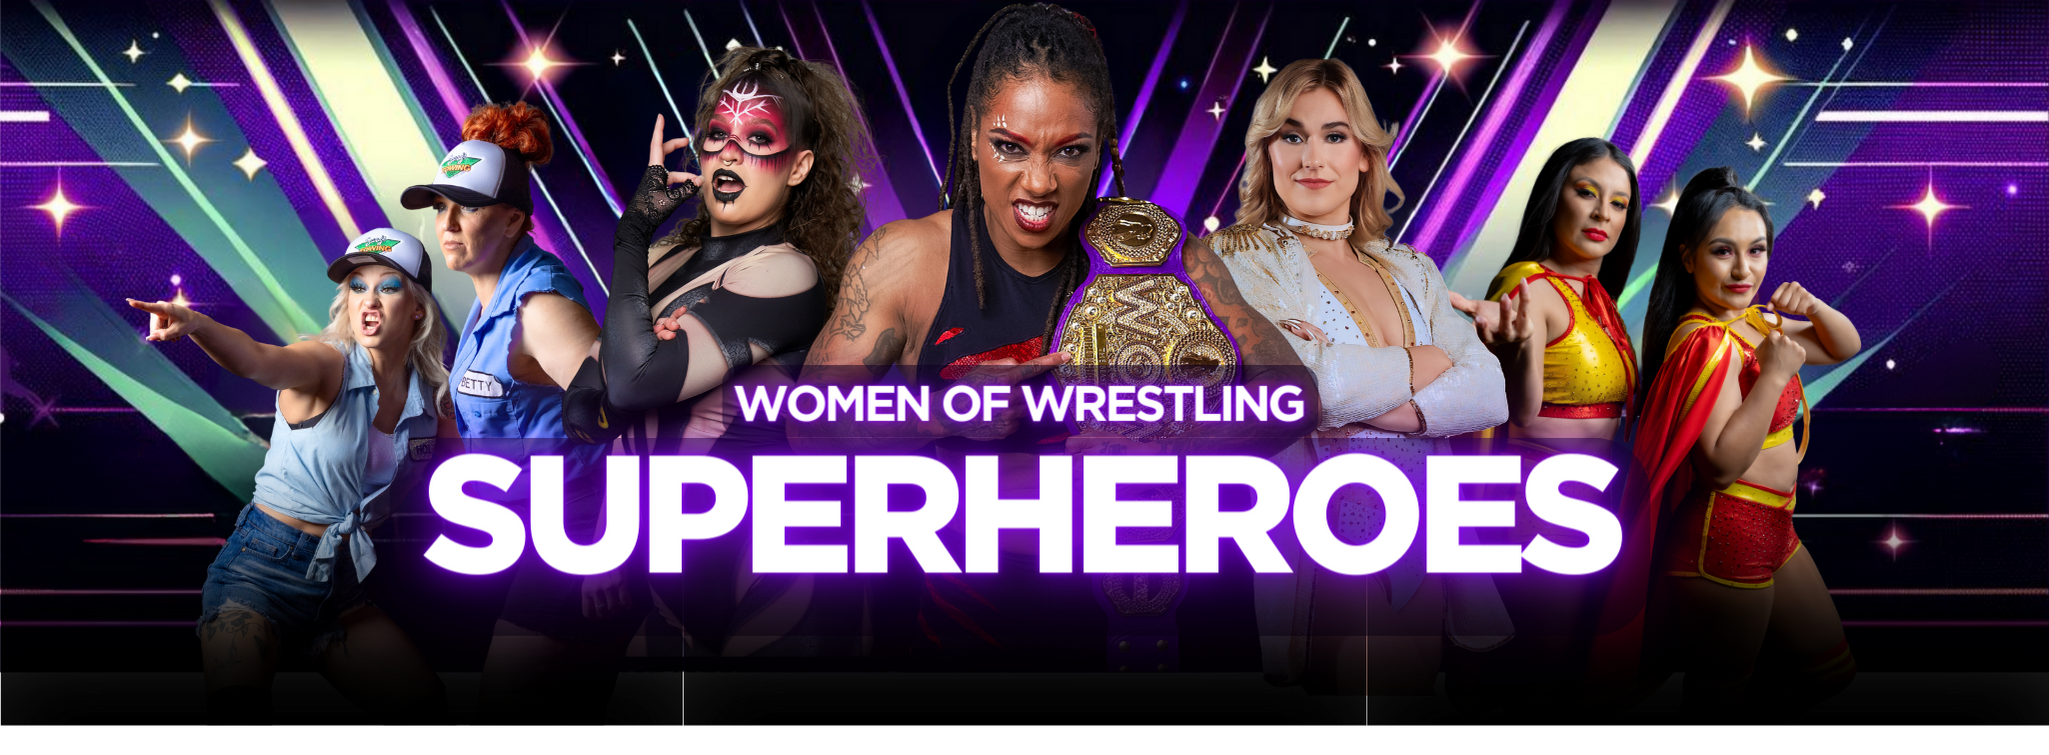 Women of Wrestling Superheroes